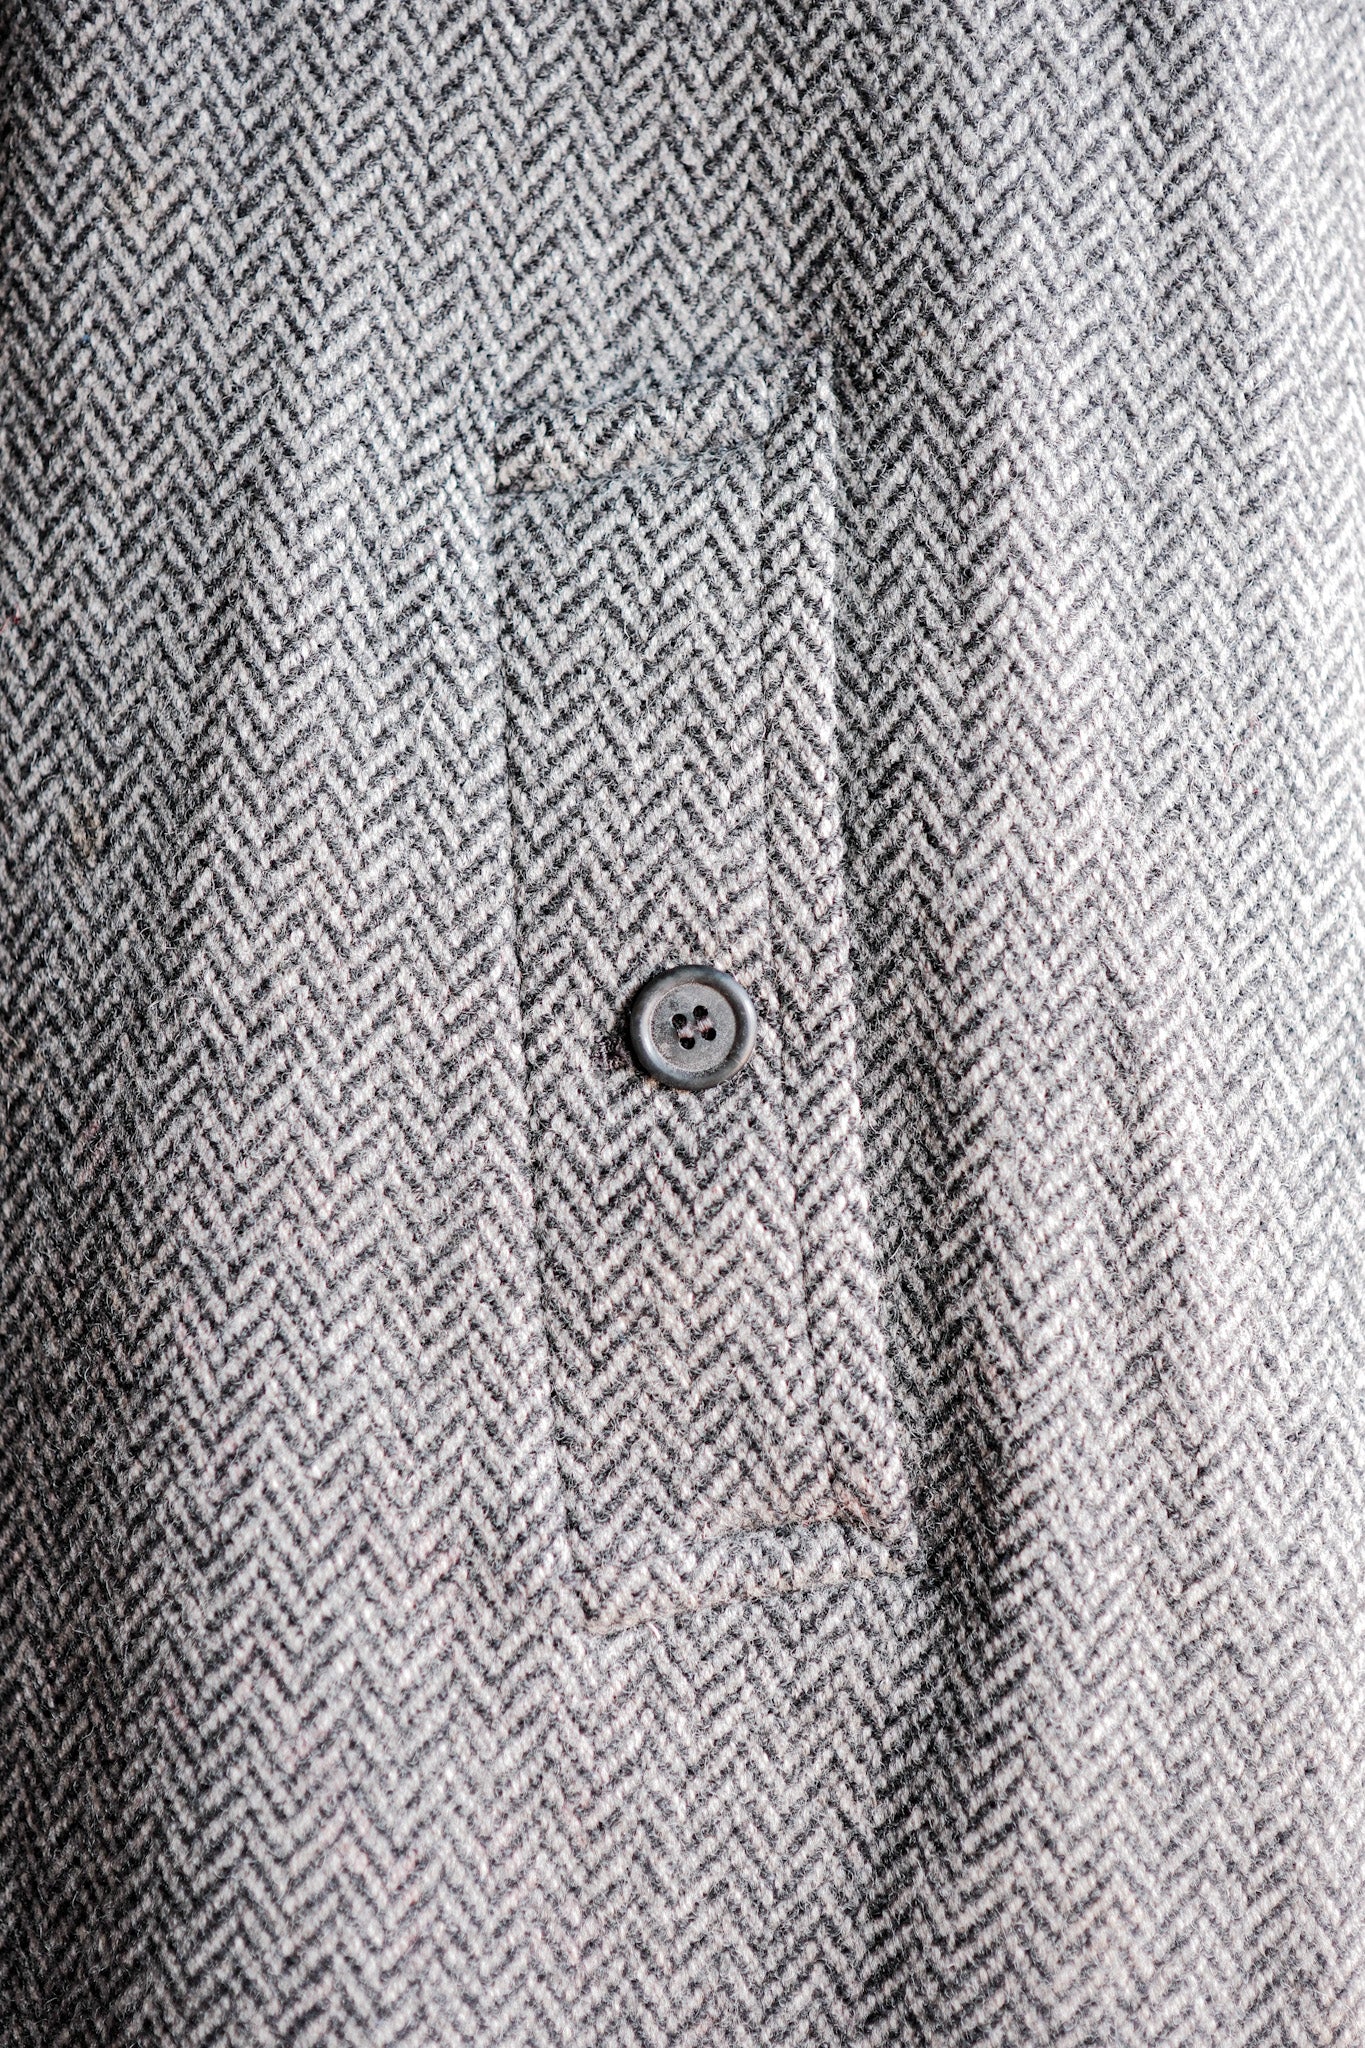 [~ 90's] Vintage Burberry's Single RagLan Balmacaan COAT SIZE.54REG "SHETLAND Tweed"